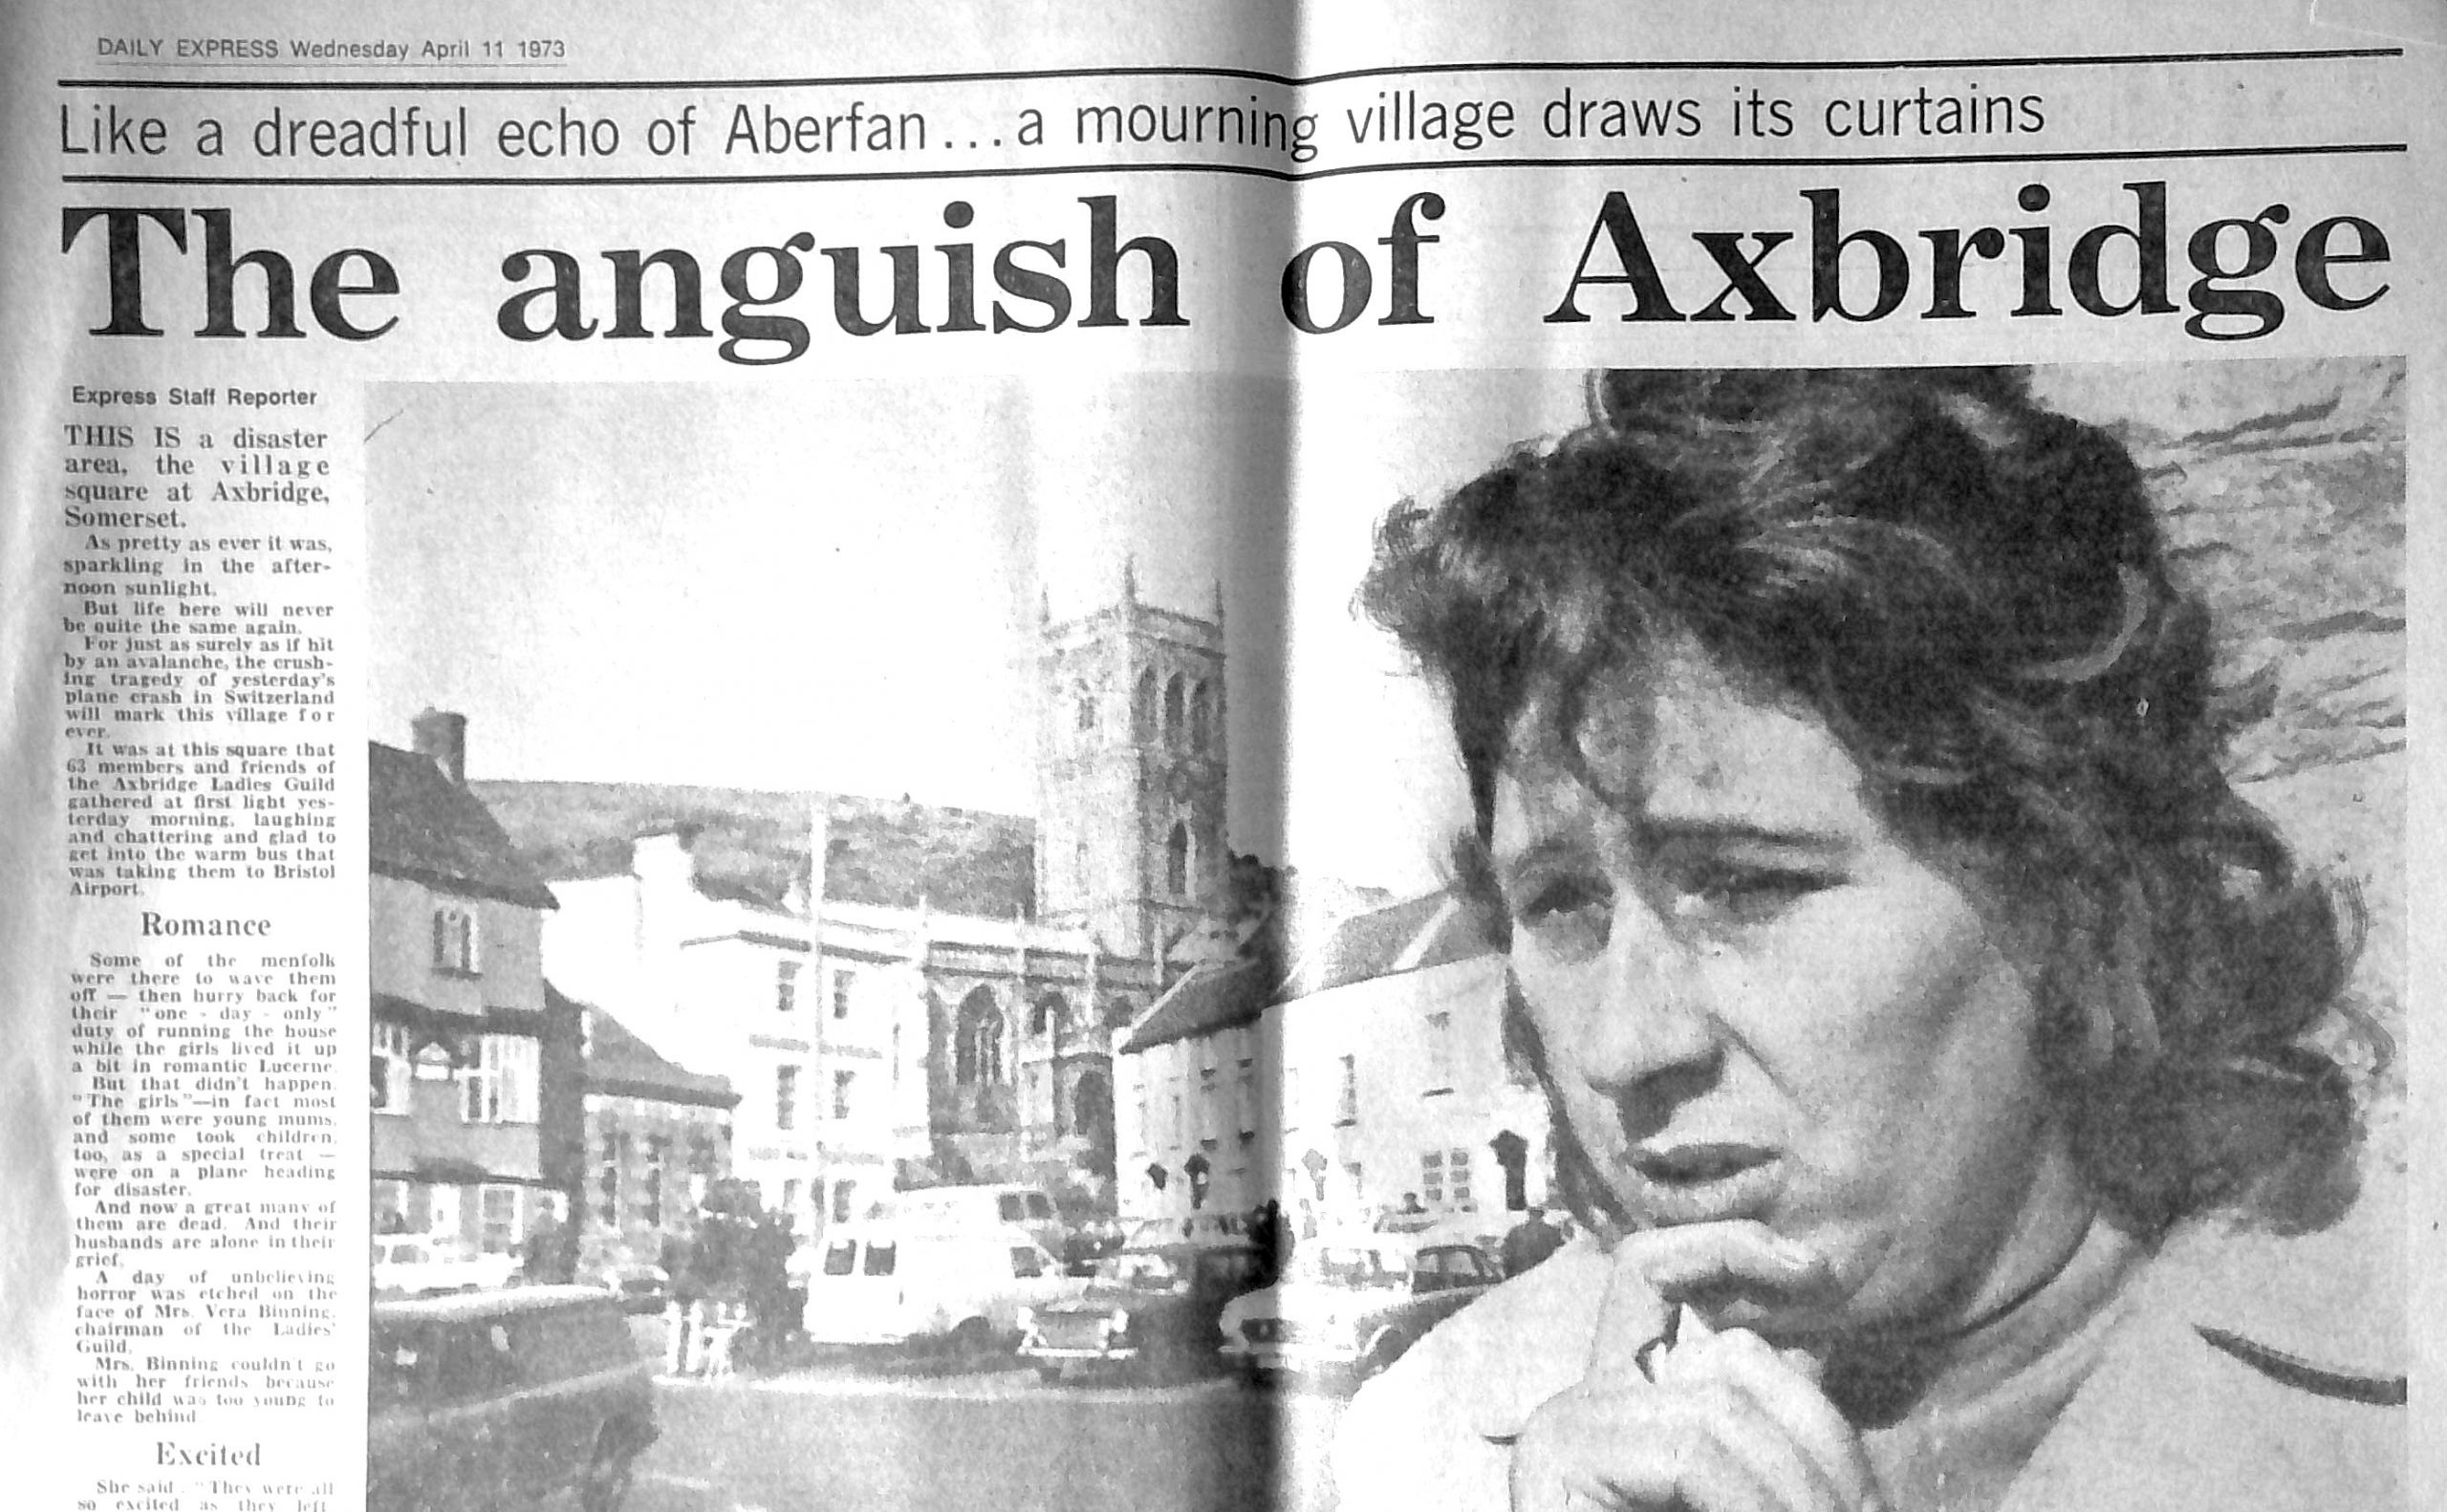 The anguish of Axbridge